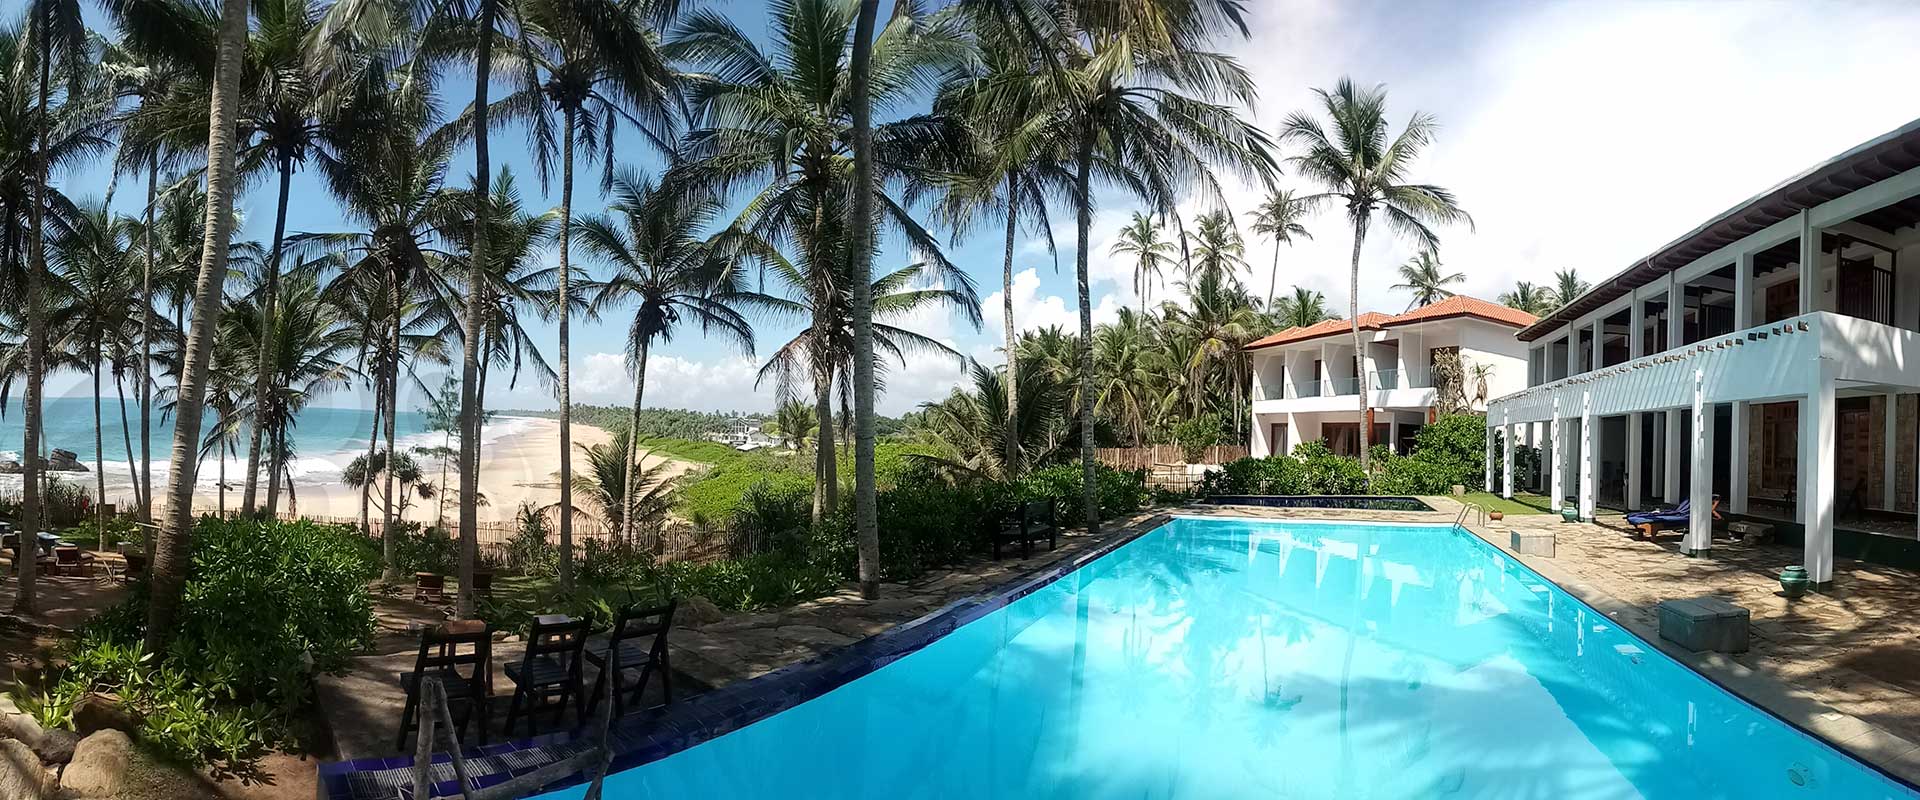 Turtle Bay Hotel Tangalle Sri Lanka original asia rondreis sri lanka malediven pool1